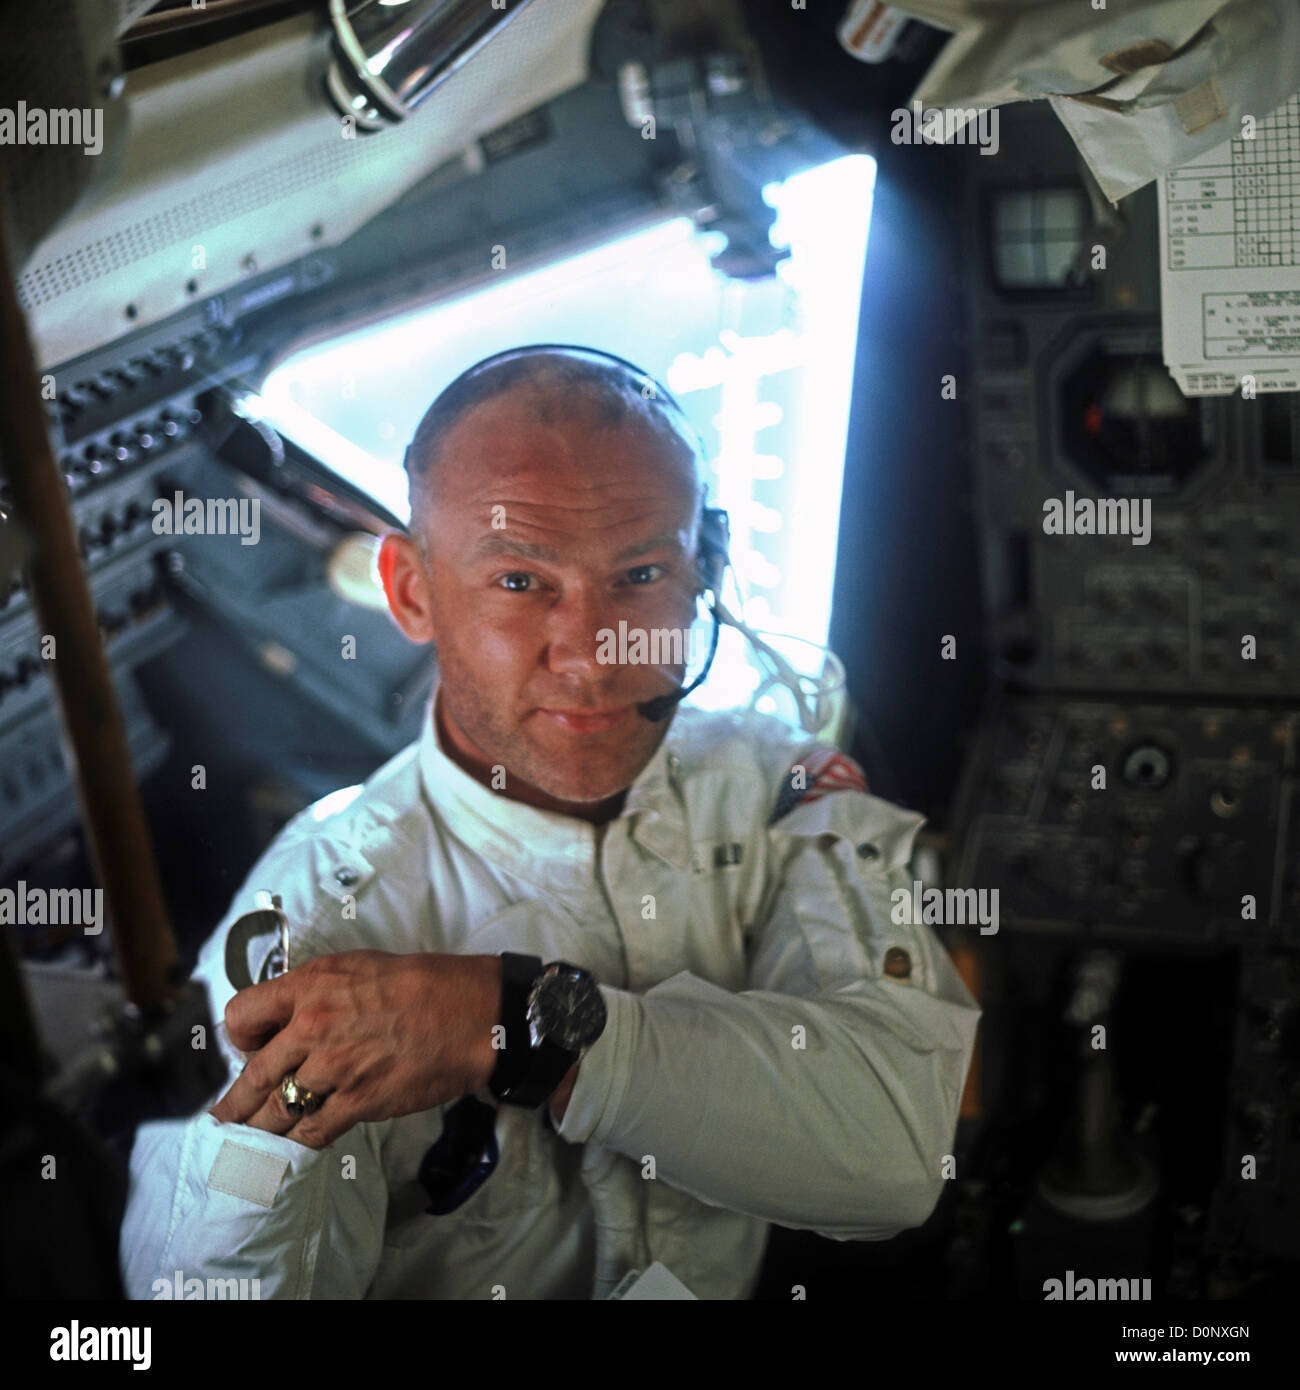 Buzz Aldrin Aboard the Eagle Lunar Module During Apollo 11 Mission Stock Photo